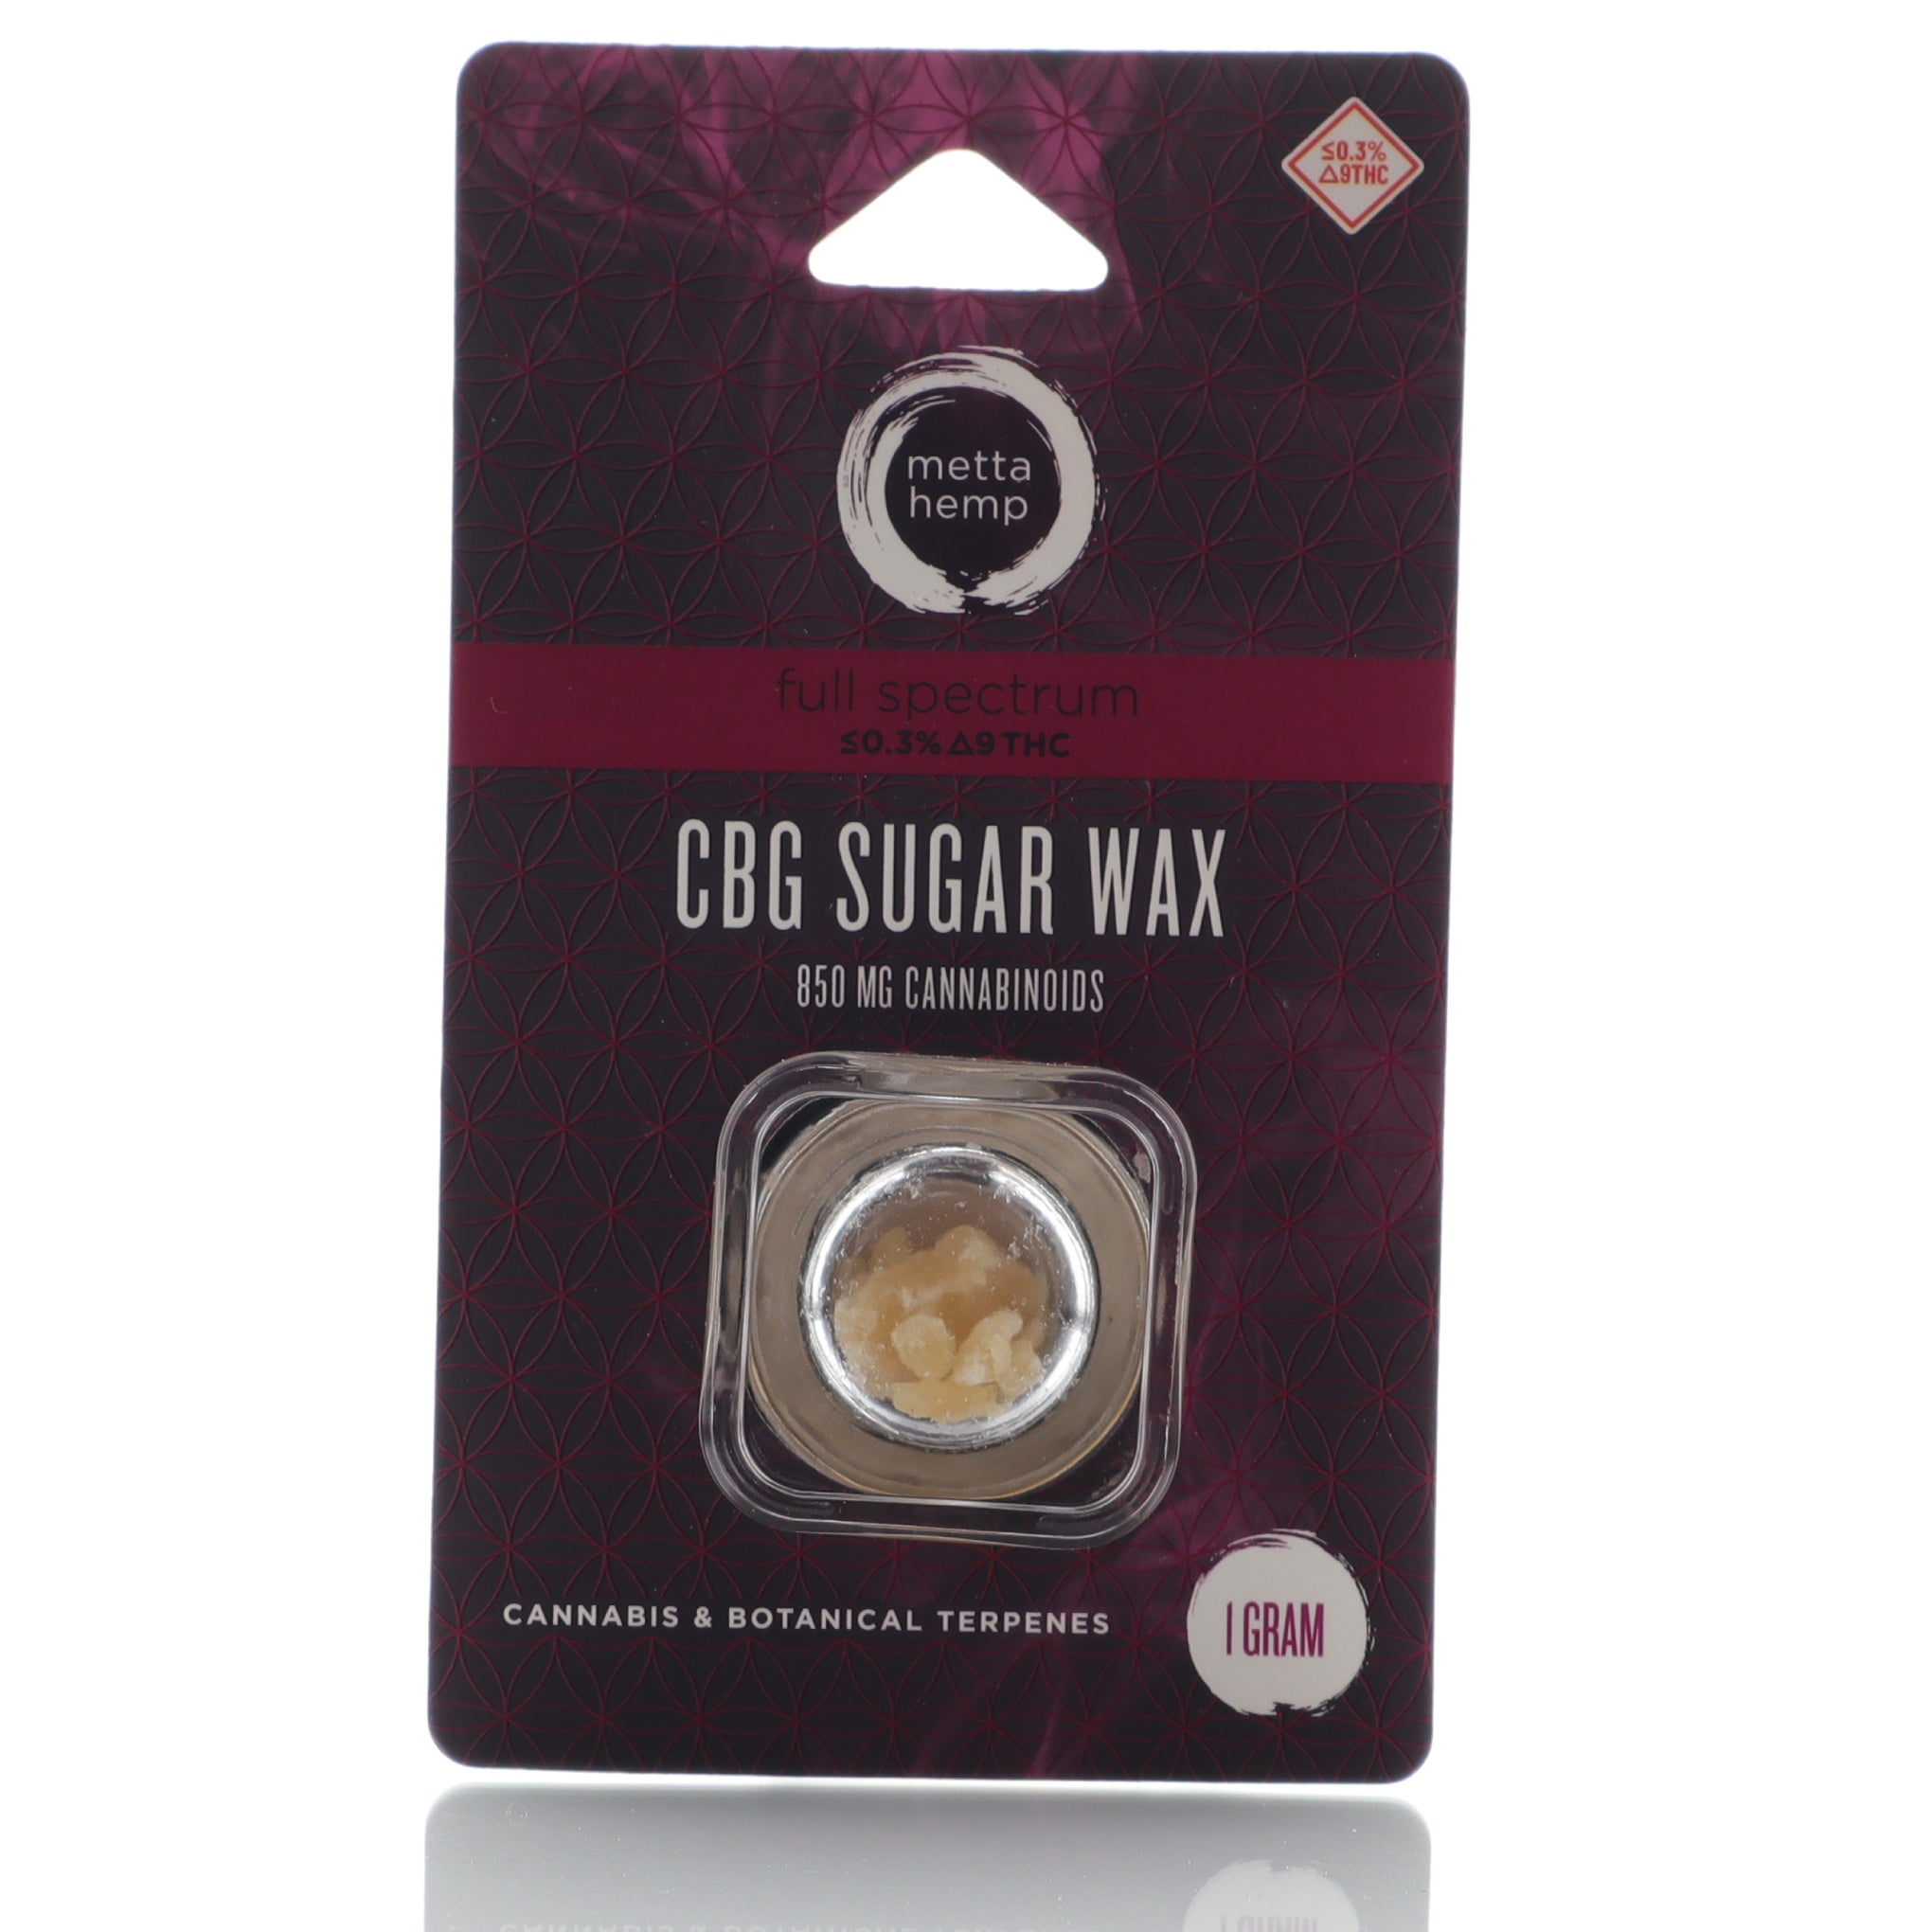 Image of Metta Hemp CBG Sugar Wax package, front.